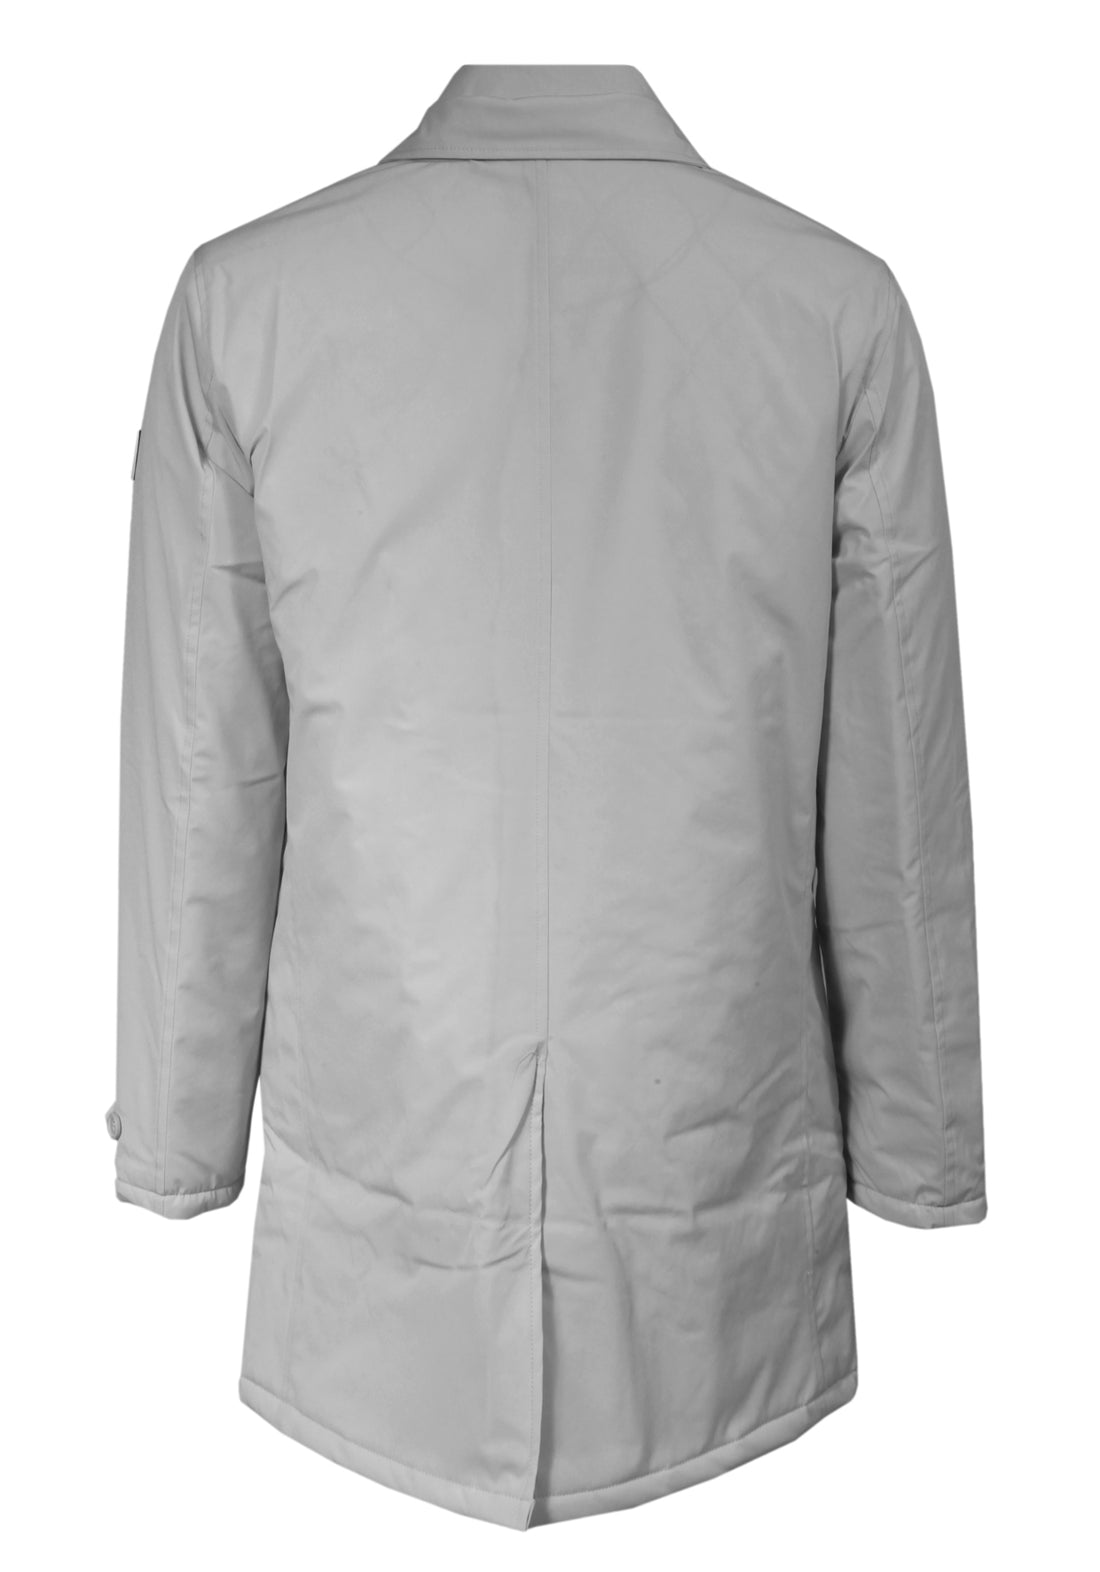 Trench Coat Shirt Collar Removable internal bib - Grey